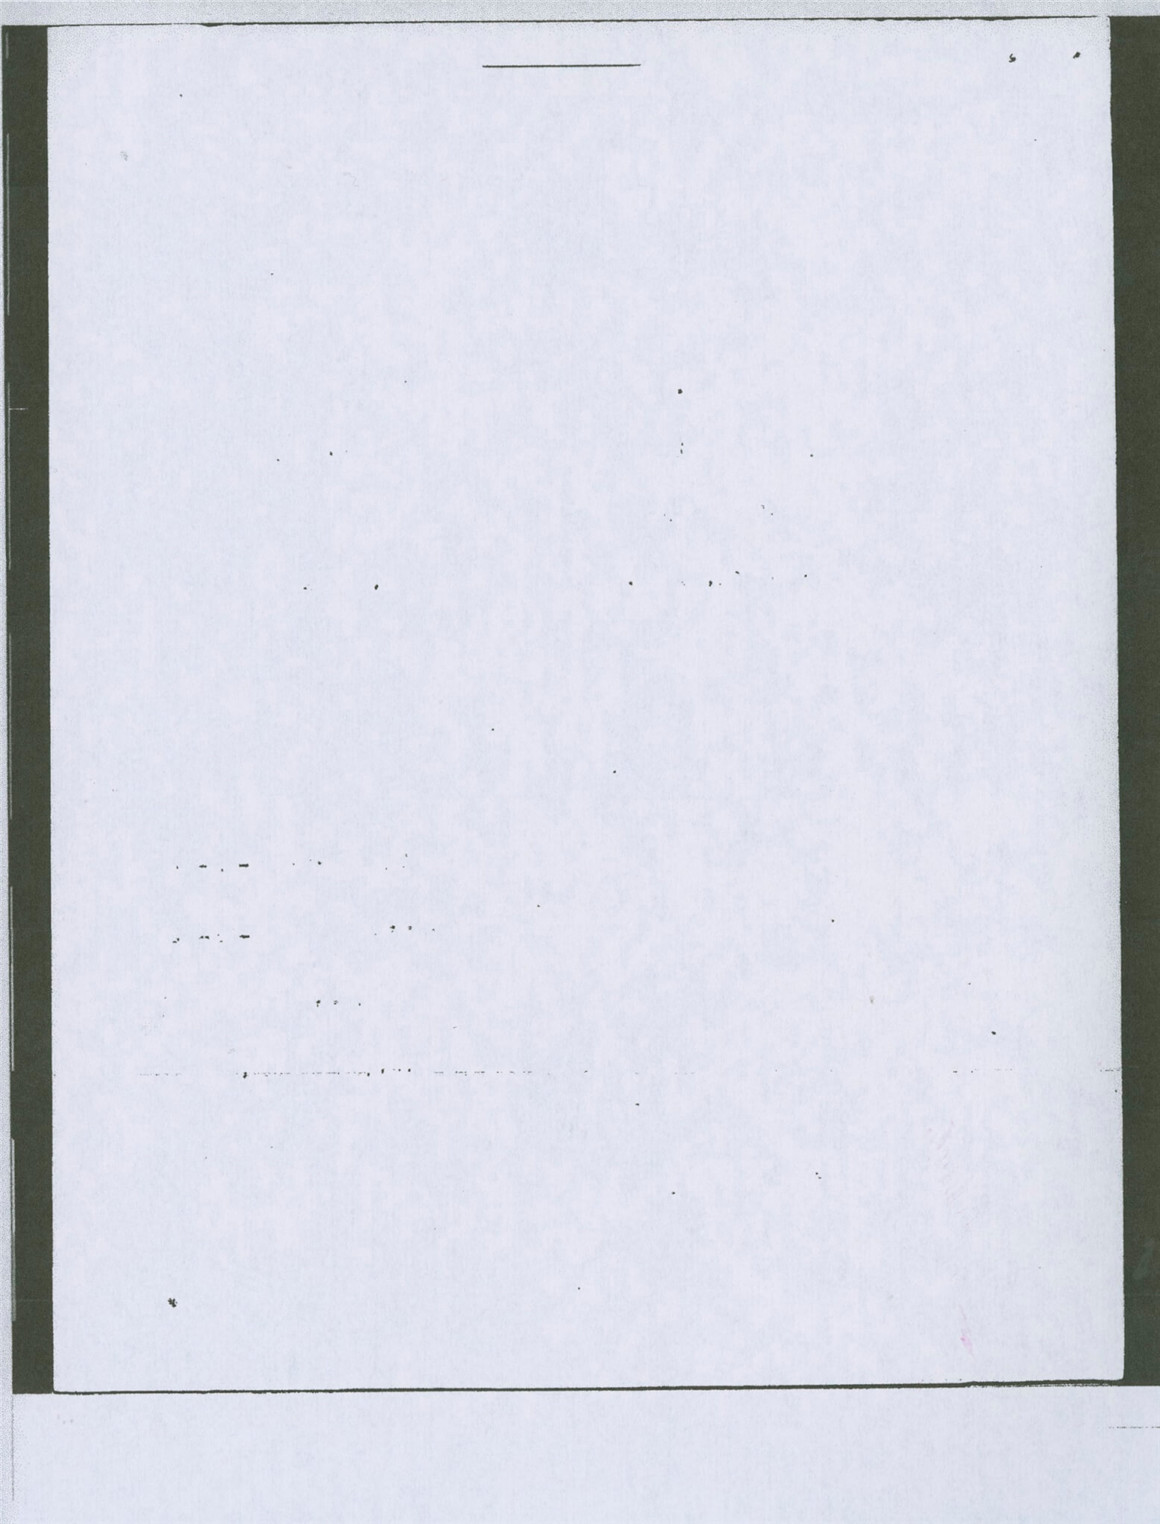 BLKMARKET 75个高分辨率黑白文件影印纸张标签背景设计纹理 TRASH SCANS 图片素材 第5张